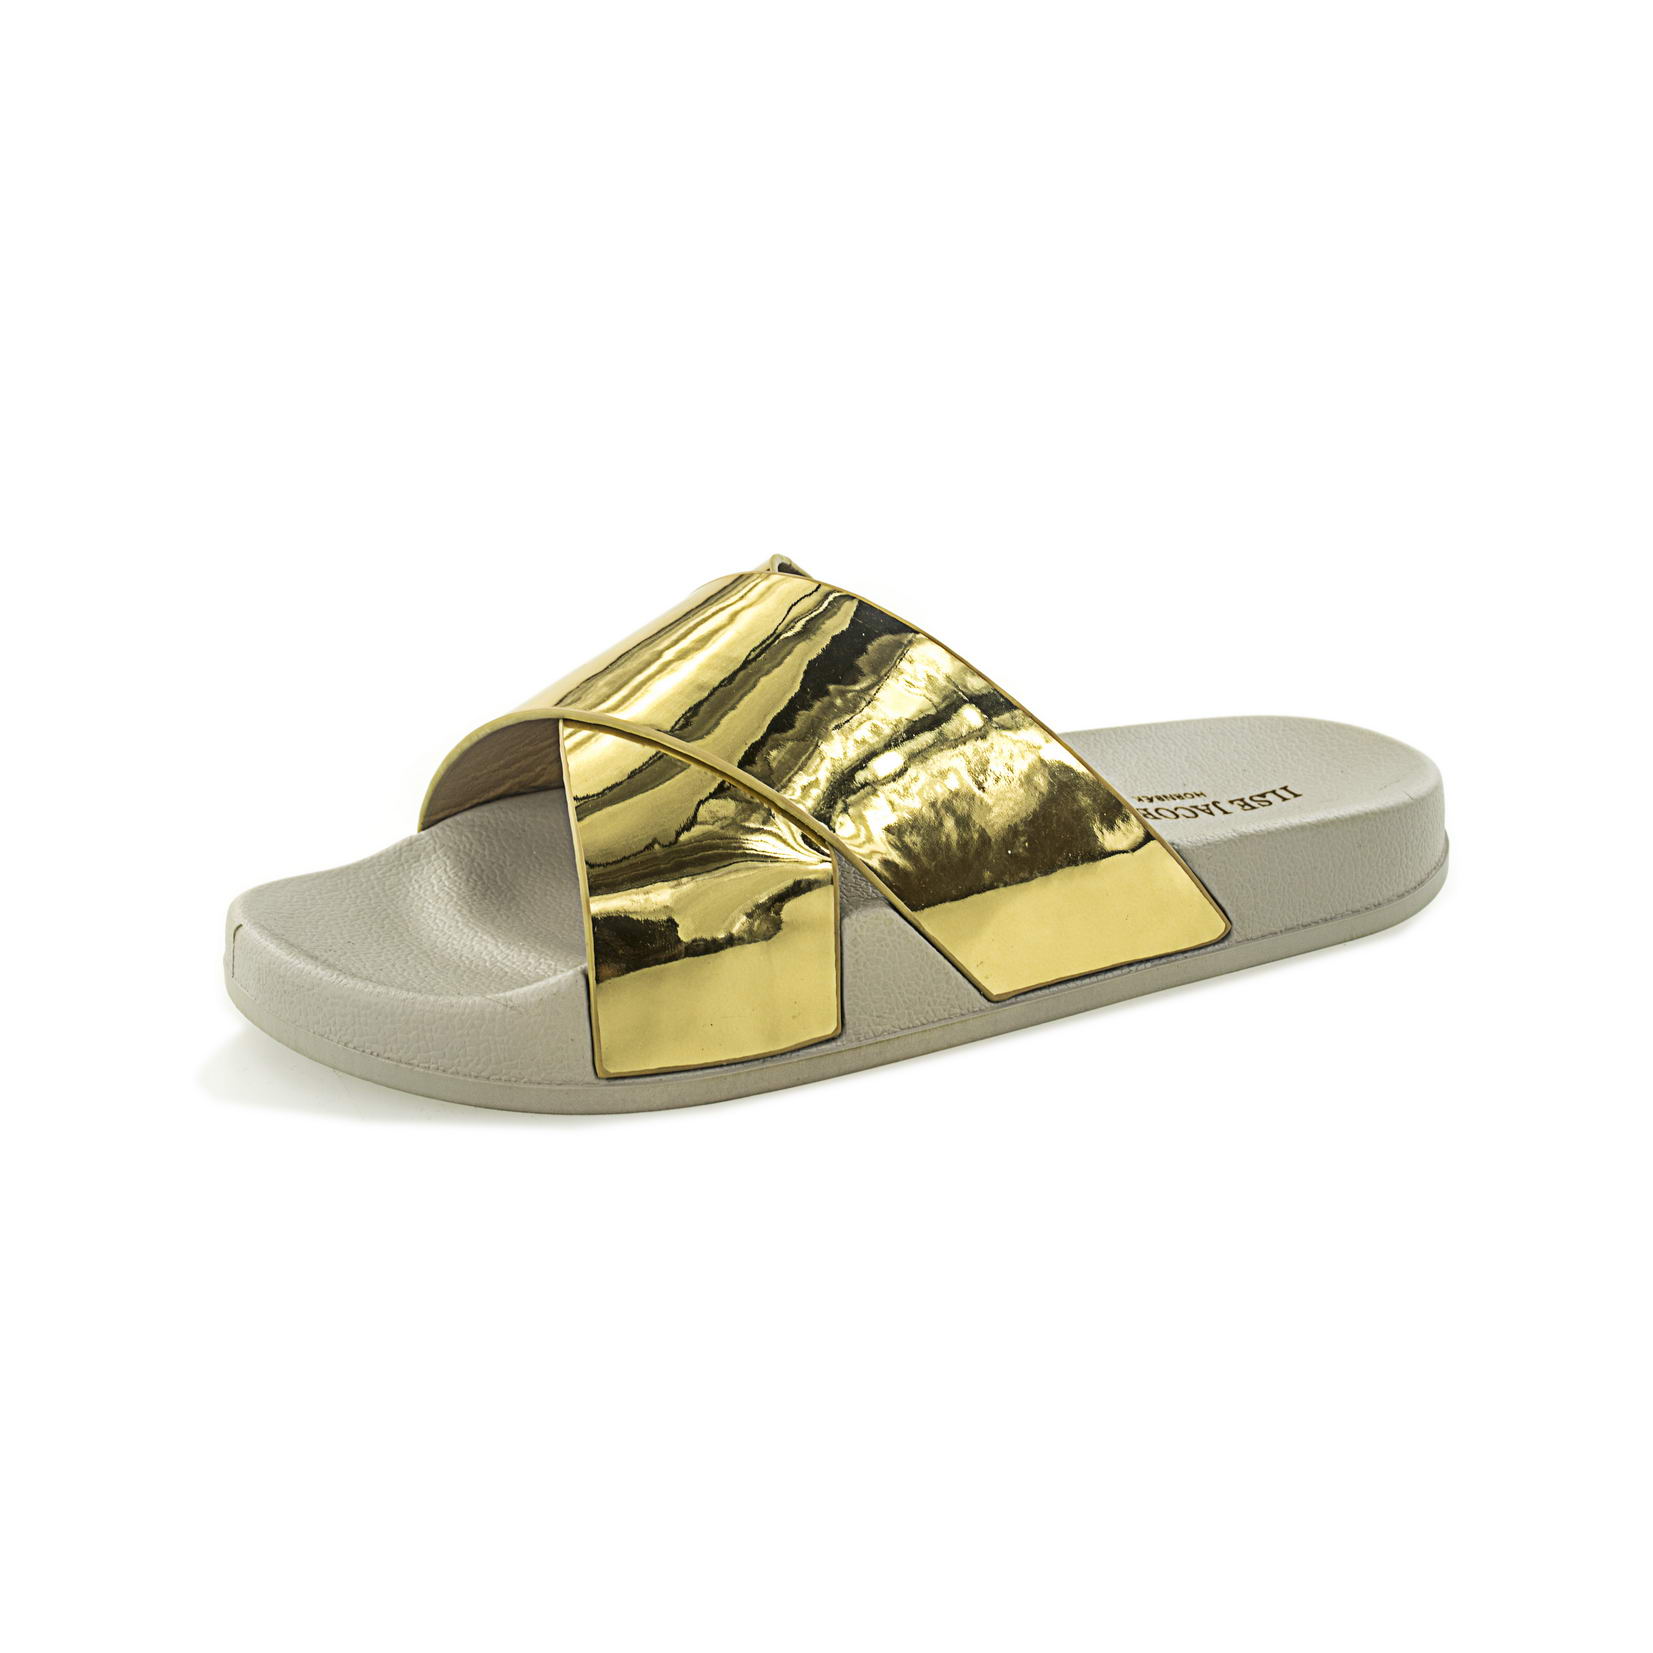 SUNHLTN1809222 cross sandal metallic - Sunshineo shoe factory